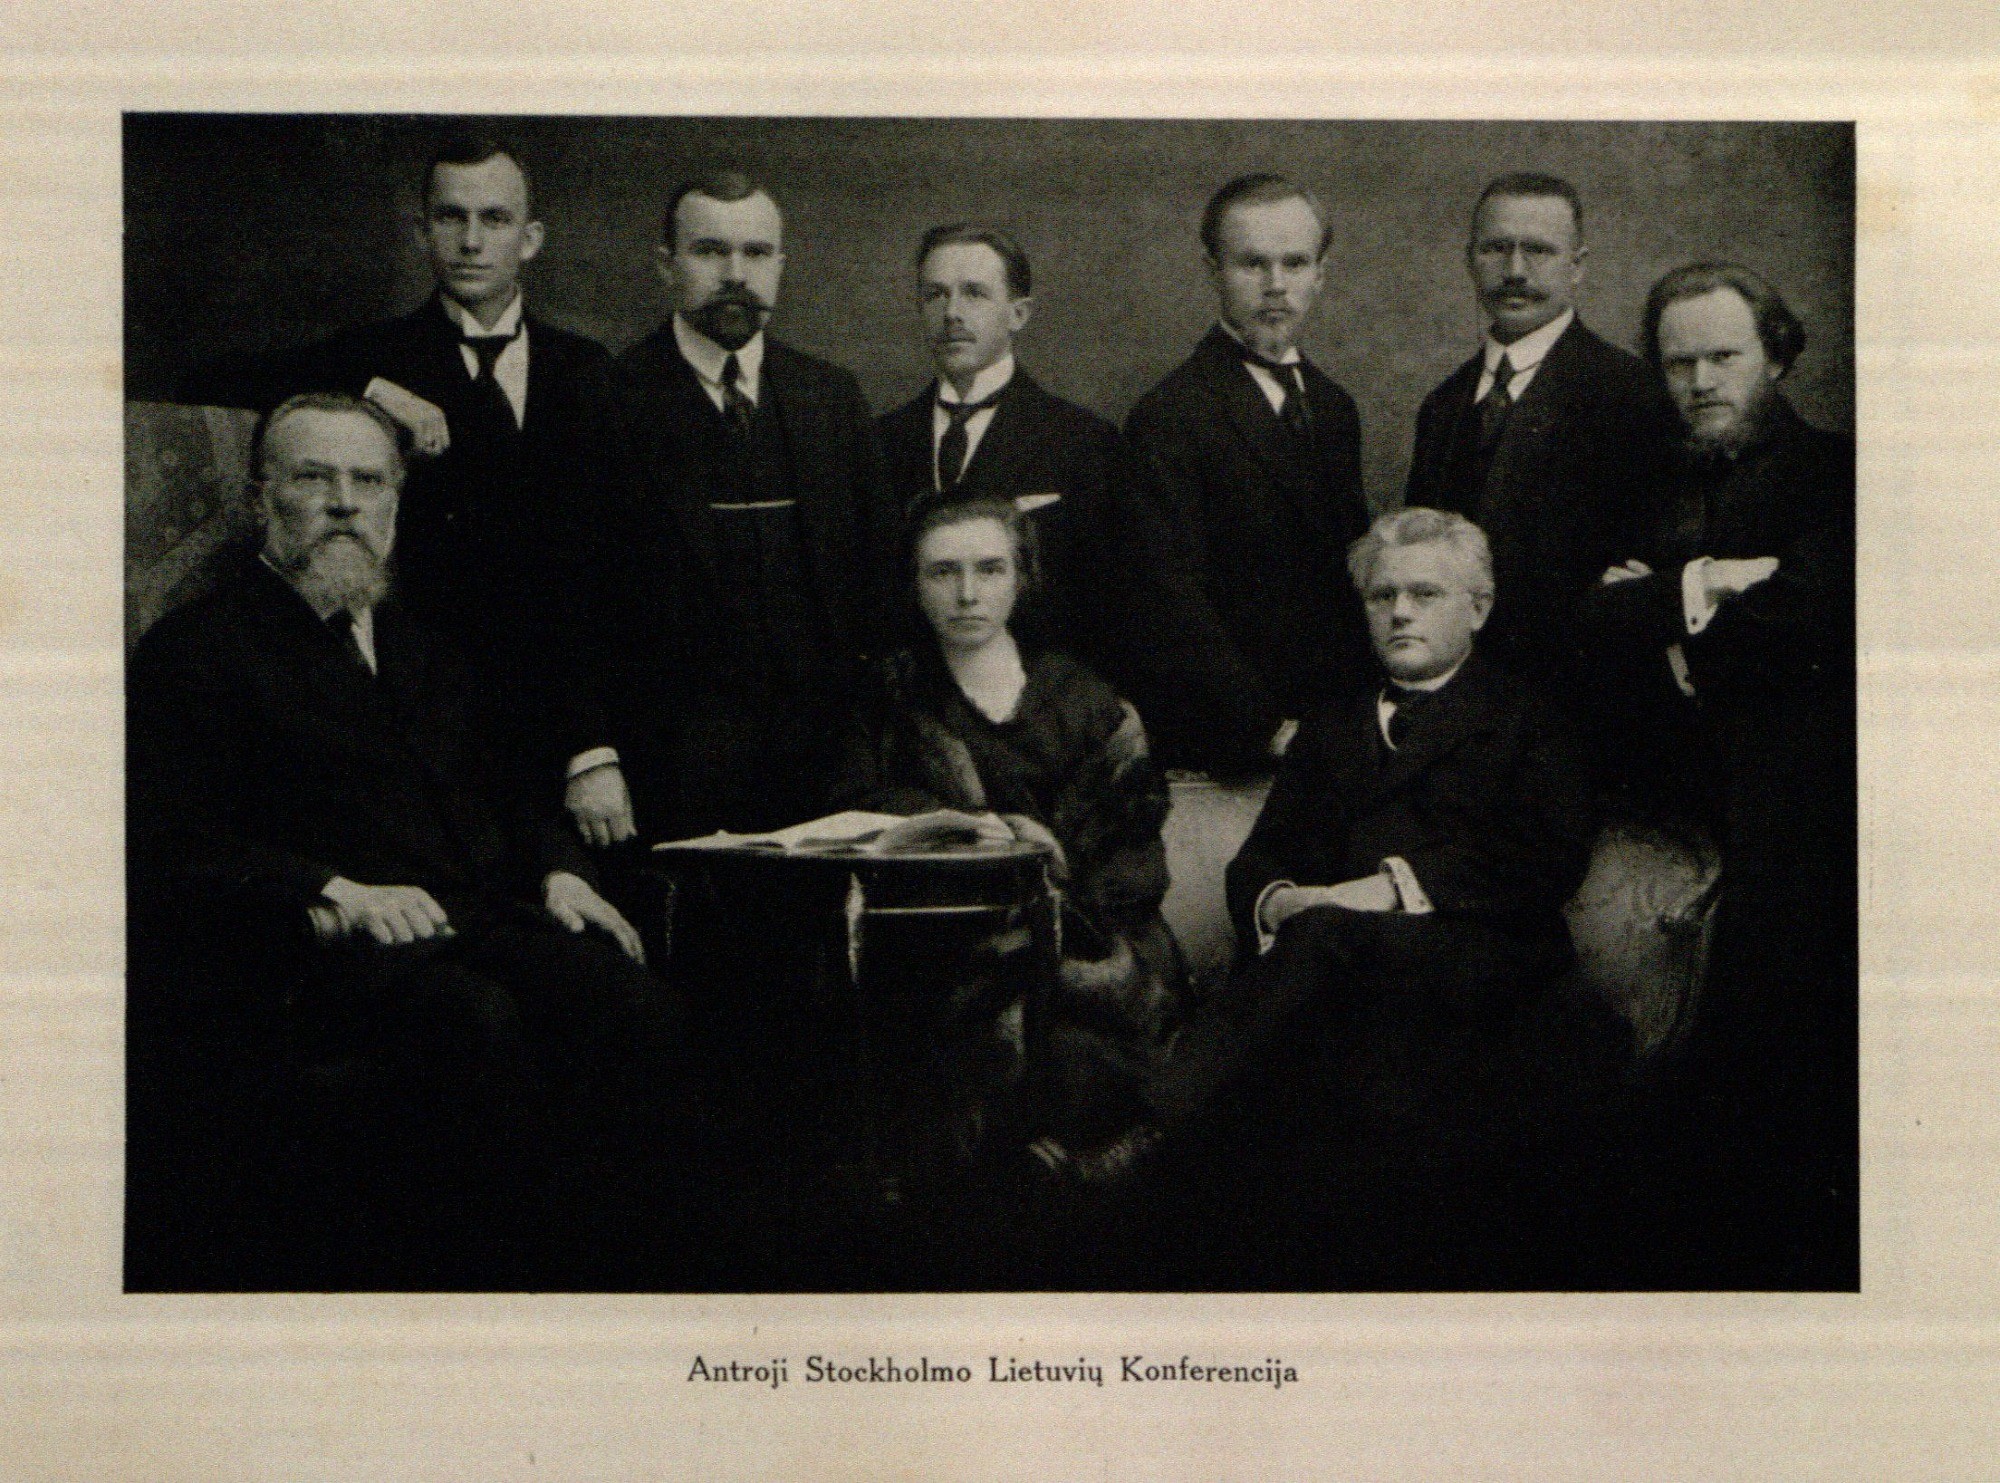 Antroji Stokholmo Lietuvių Konferencija